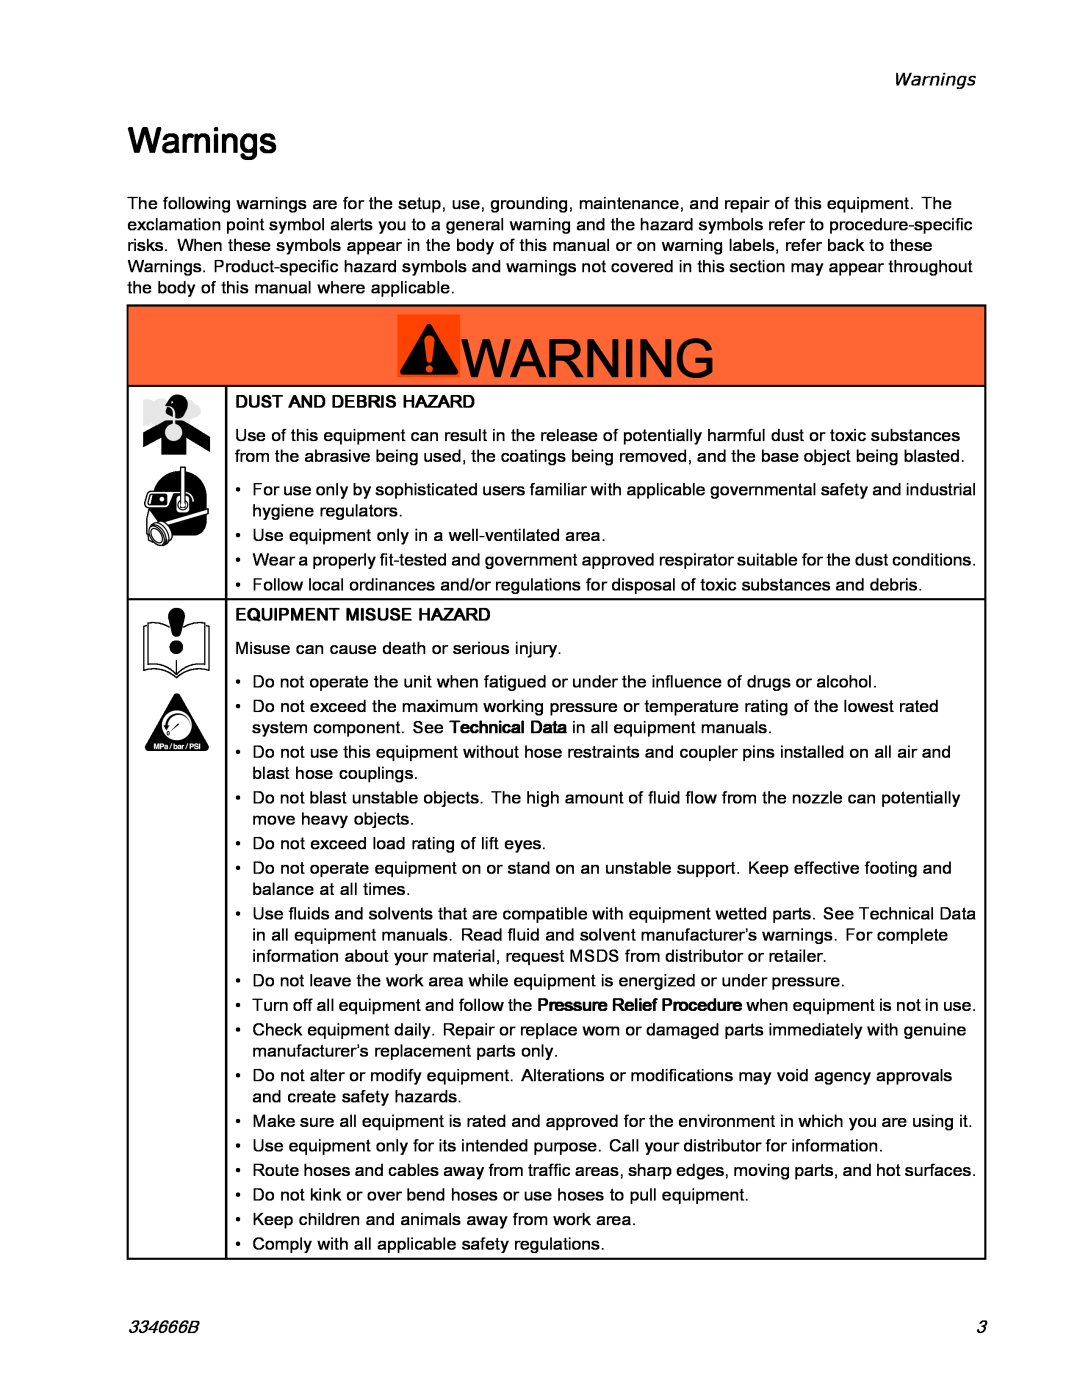 Graco ti25442a manual Warnings, Dust And Debris Hazard, Equipment Misuse Hazard, 334666B 